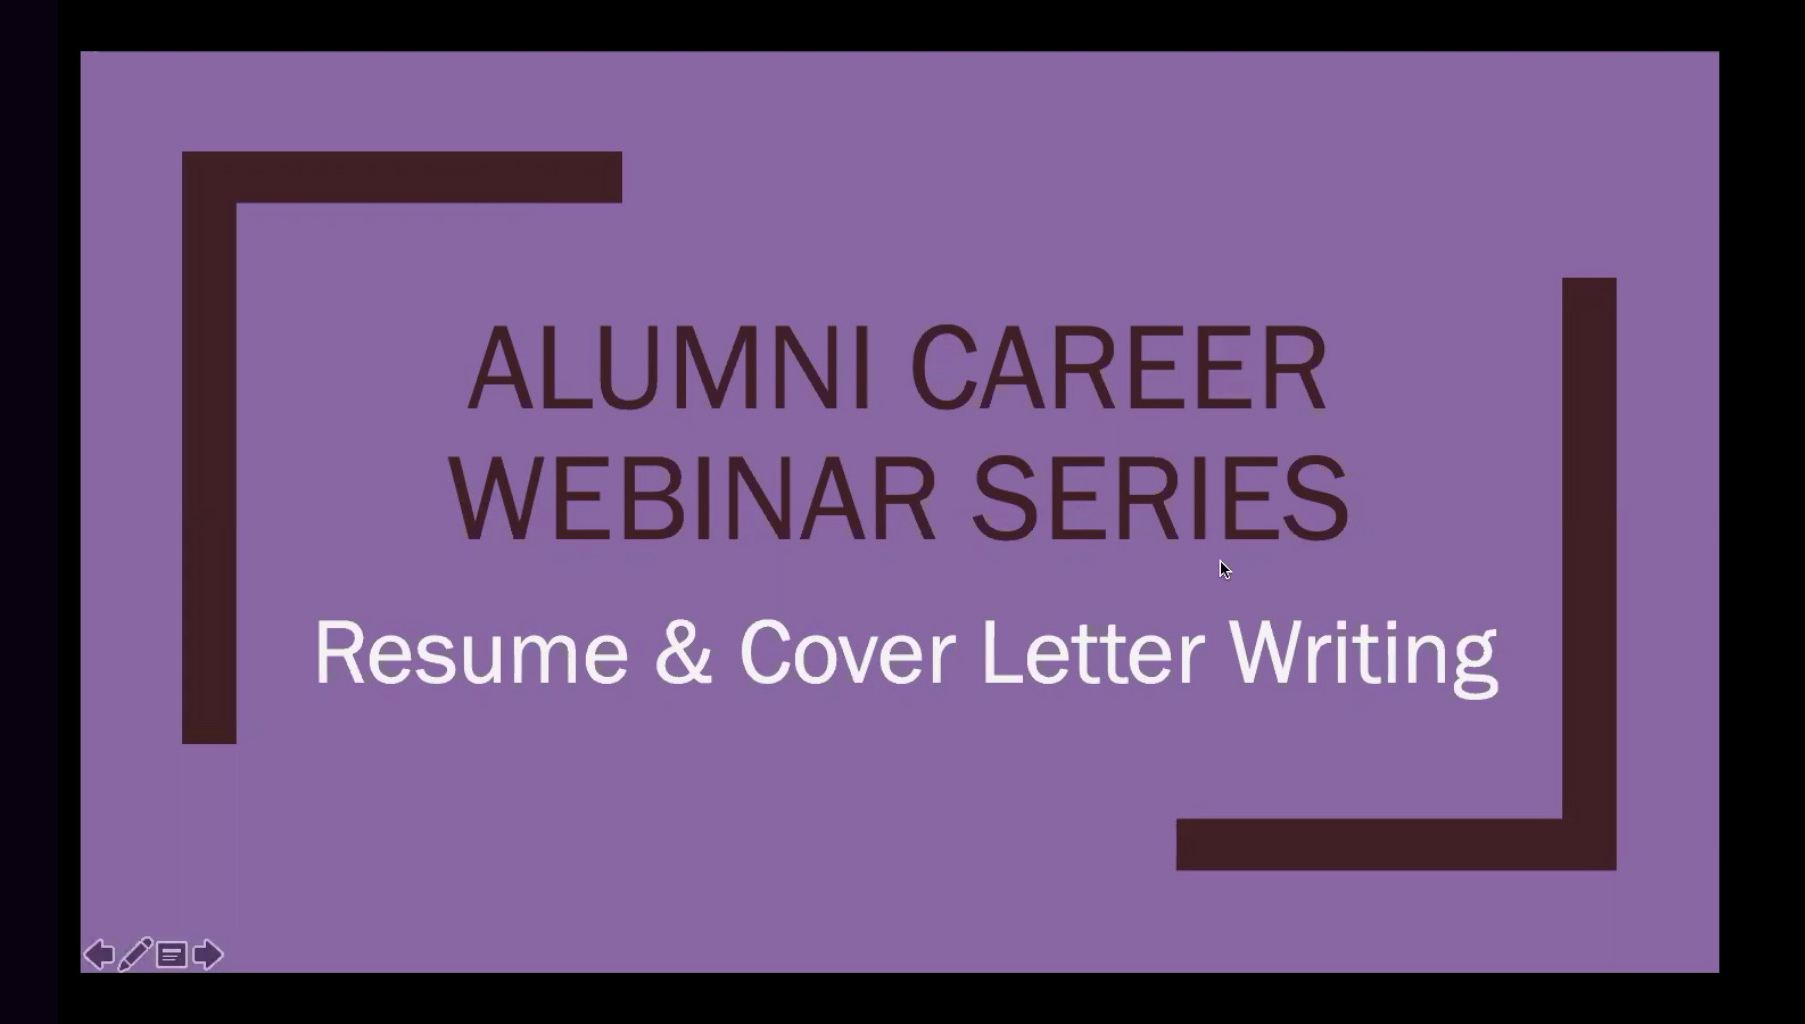 University Continues Alumni Career Development Webinar Series April 28